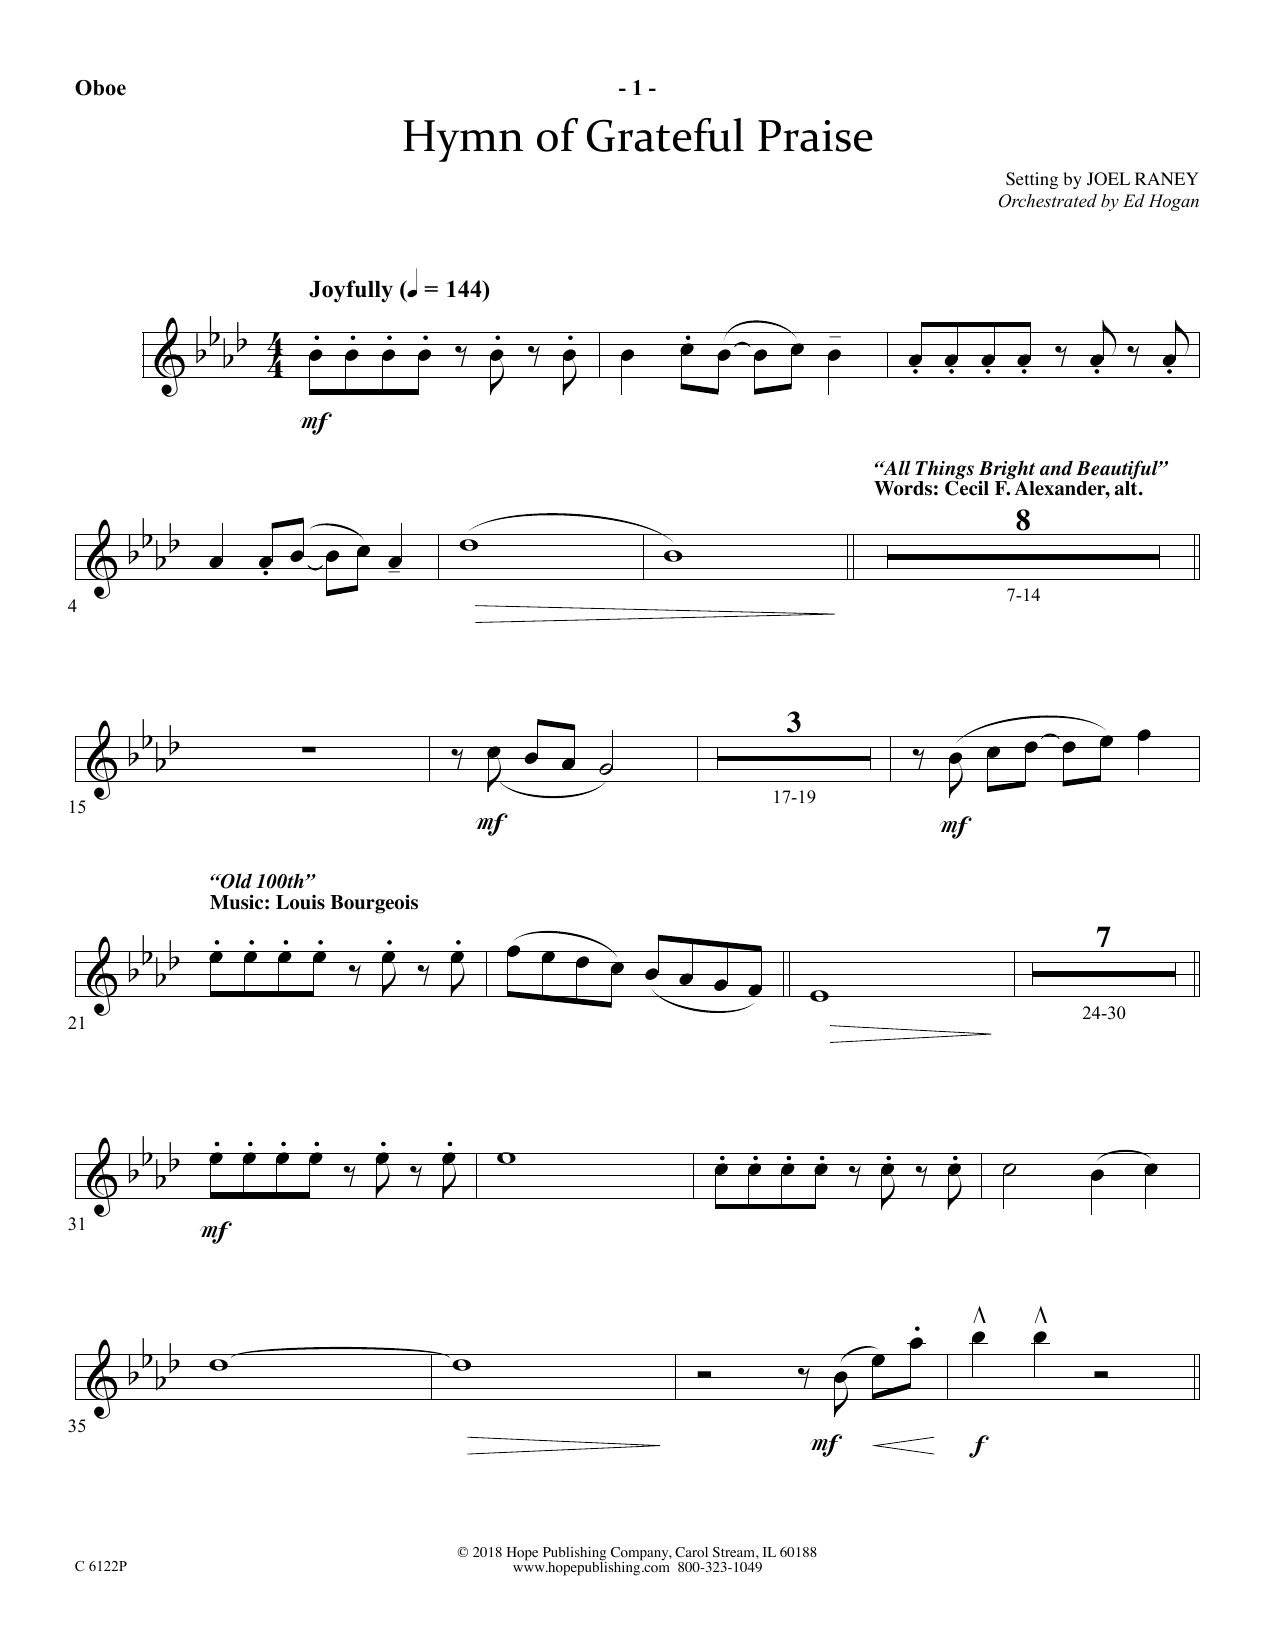 Download Joel Raney Hymn Of Grateful Praise - Oboe Sheet Music and learn how to play Choir Instrumental Pak PDF digital score in minutes